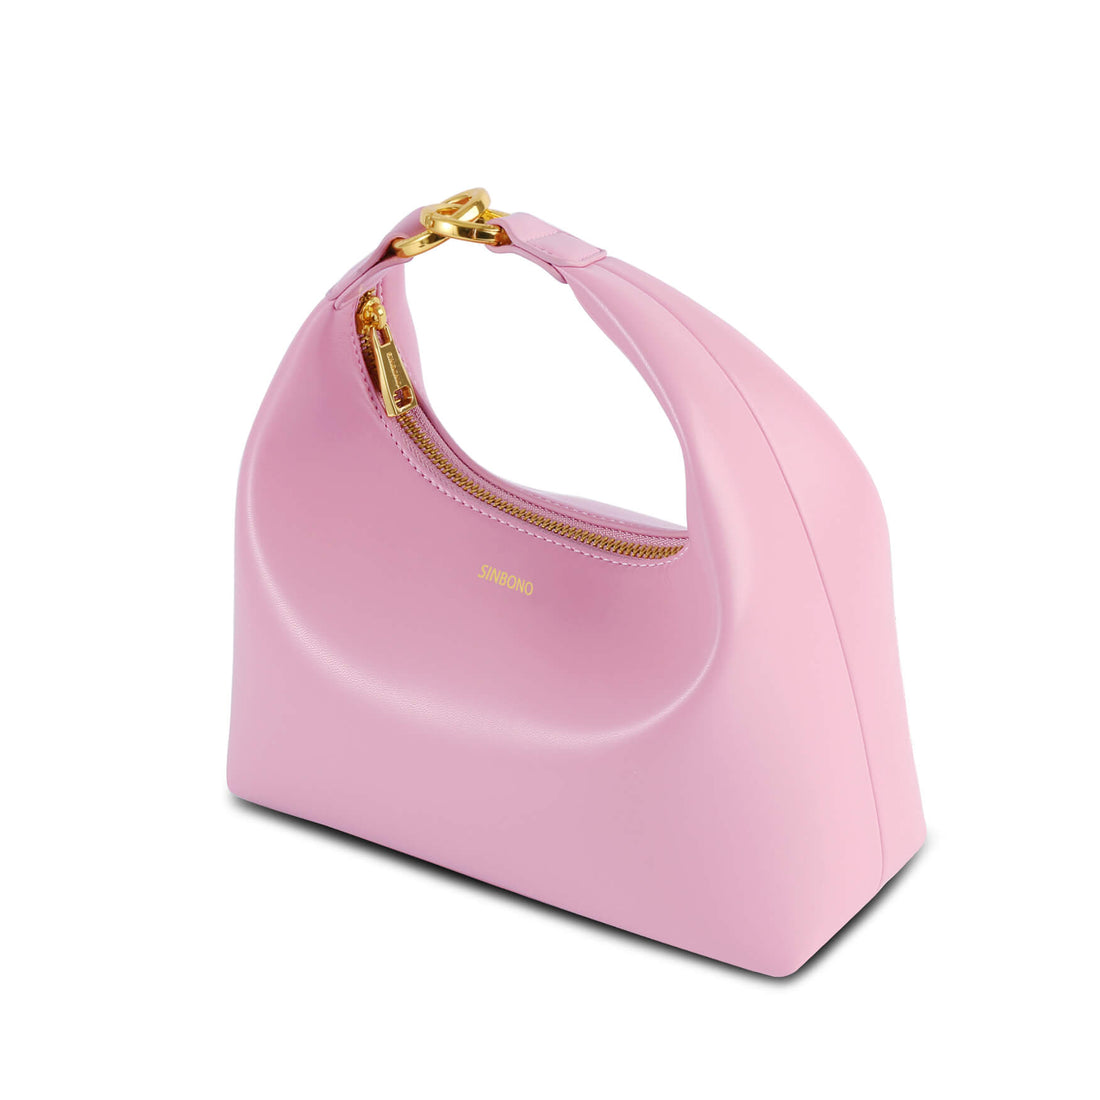 SINBONO Vienna Pink Satchel Bag Women Vegan Leather Handbag